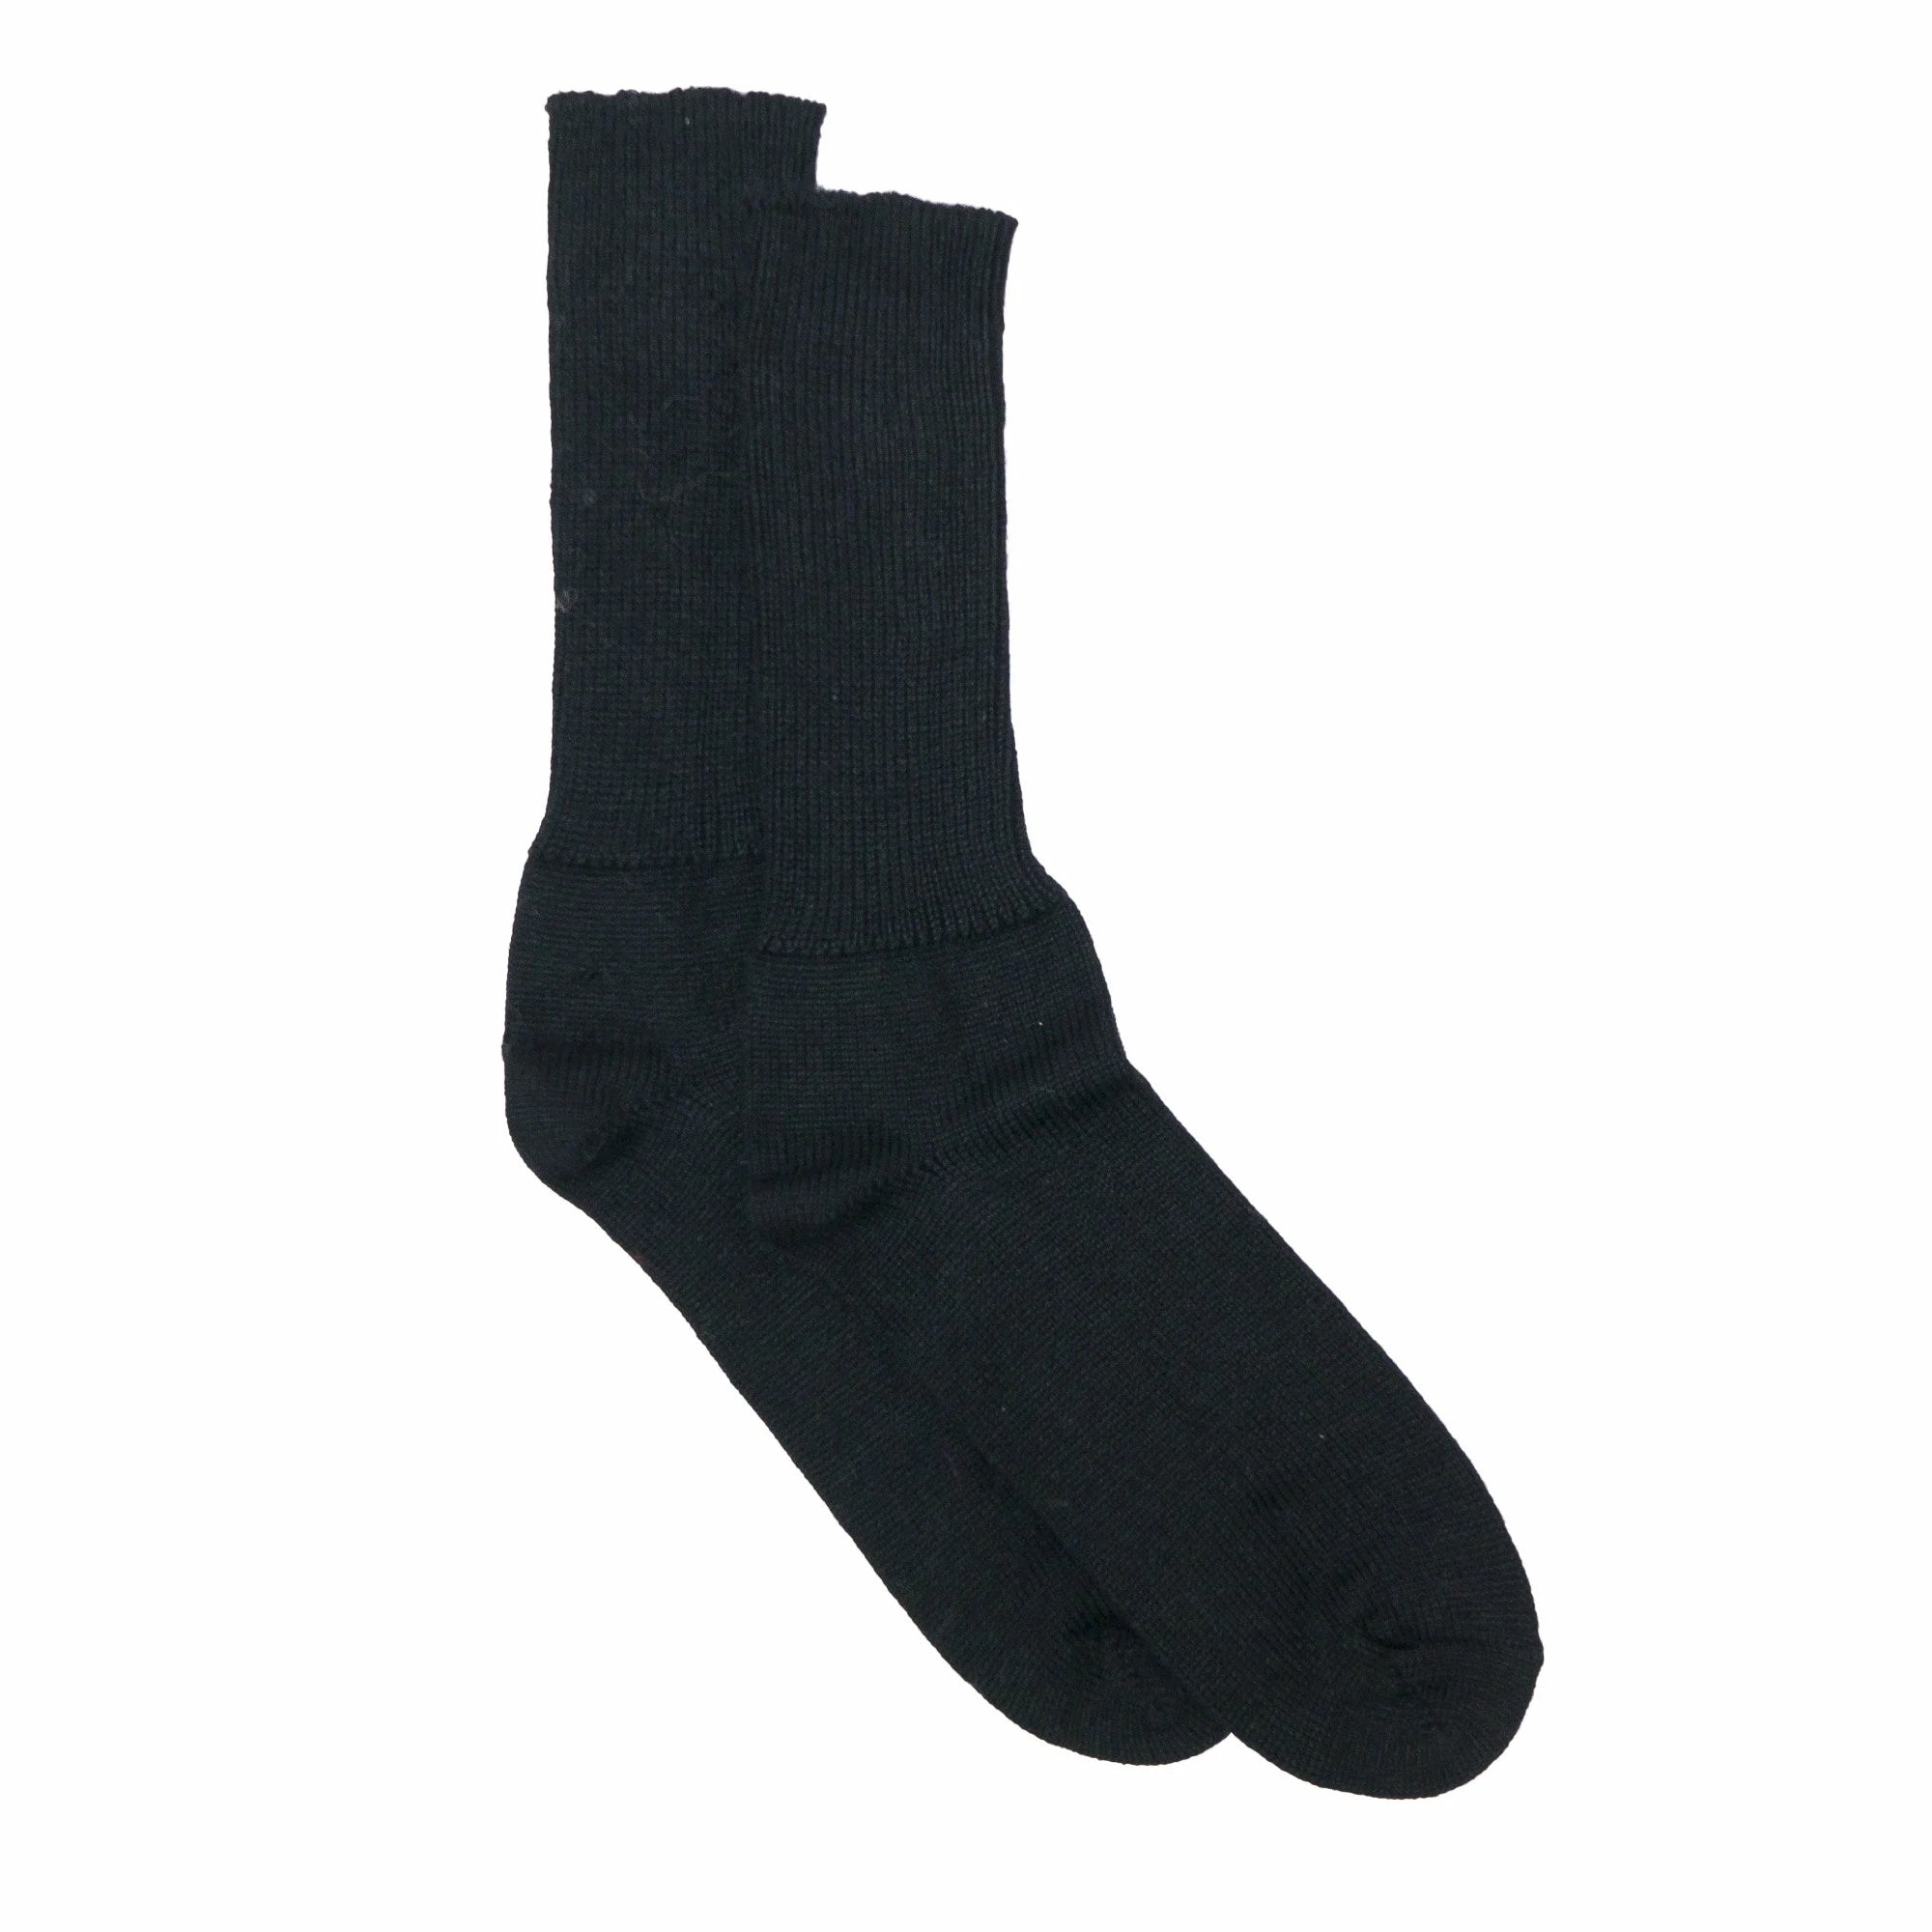 100% Handmade Alpaca Wool Socks, White, Black, Soft, Warm, Winter